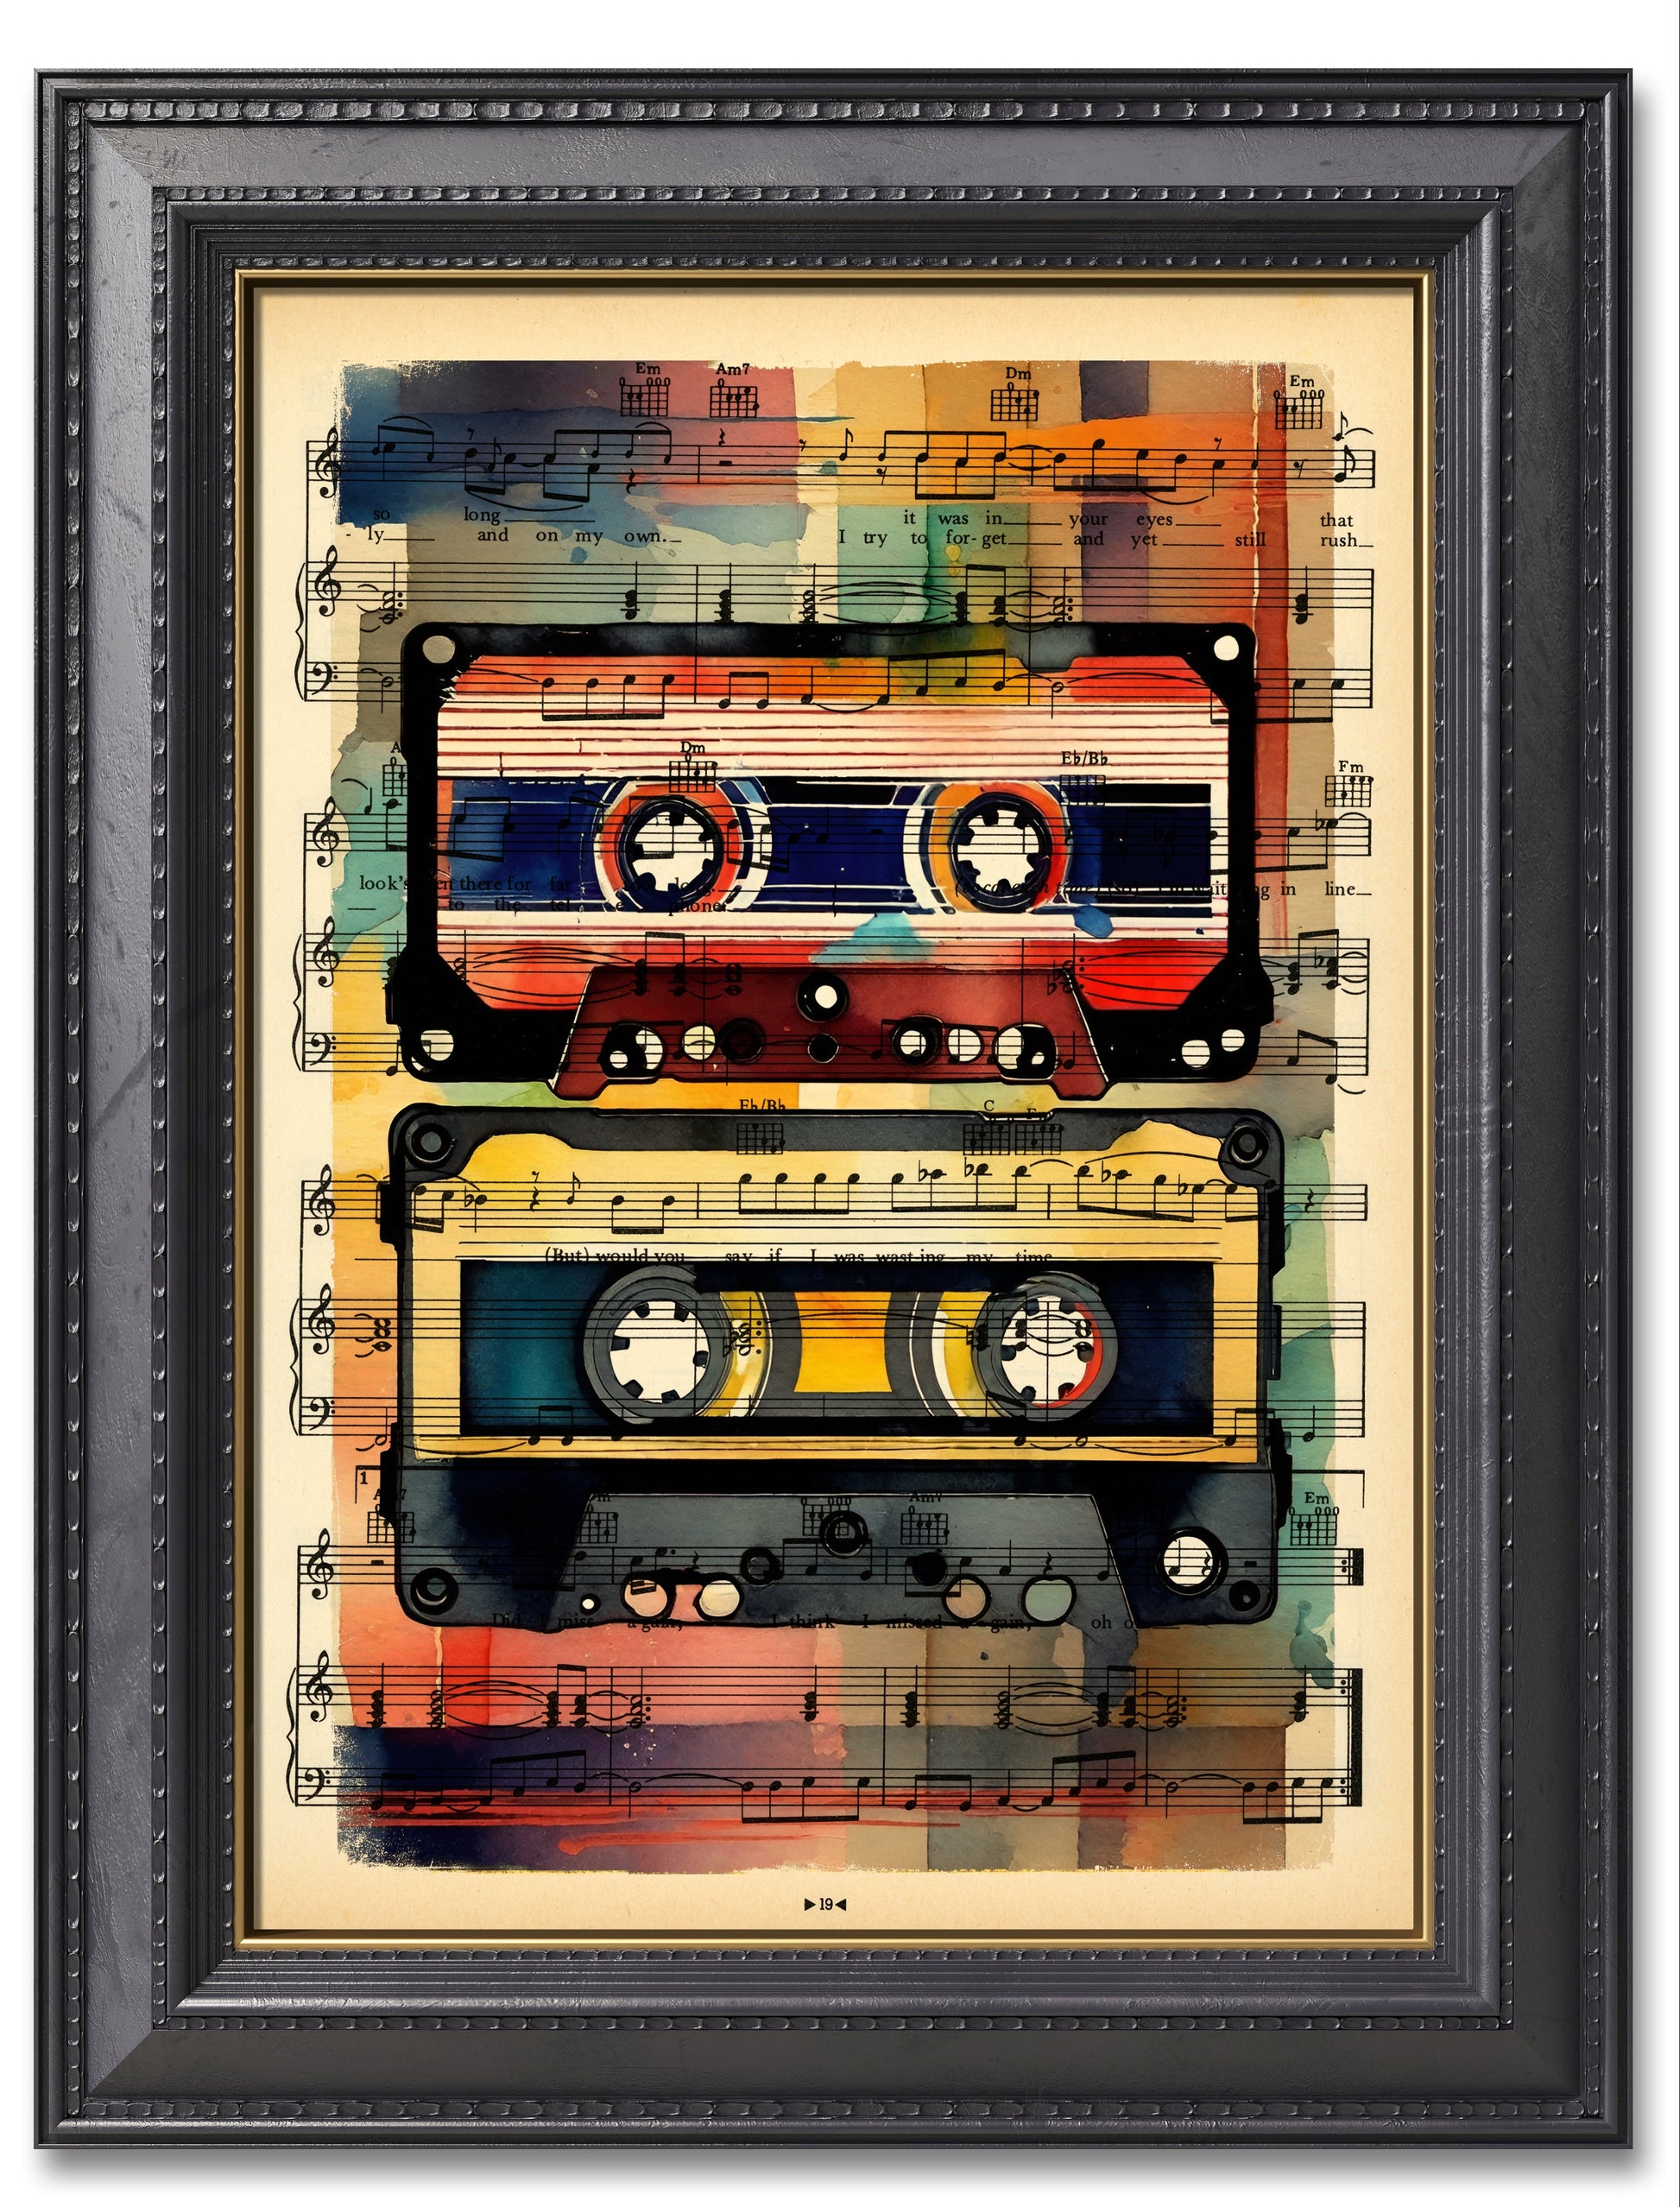 HiFi Retro Audio MixTape - A limited edition print series capturing the spirit of the 80s.